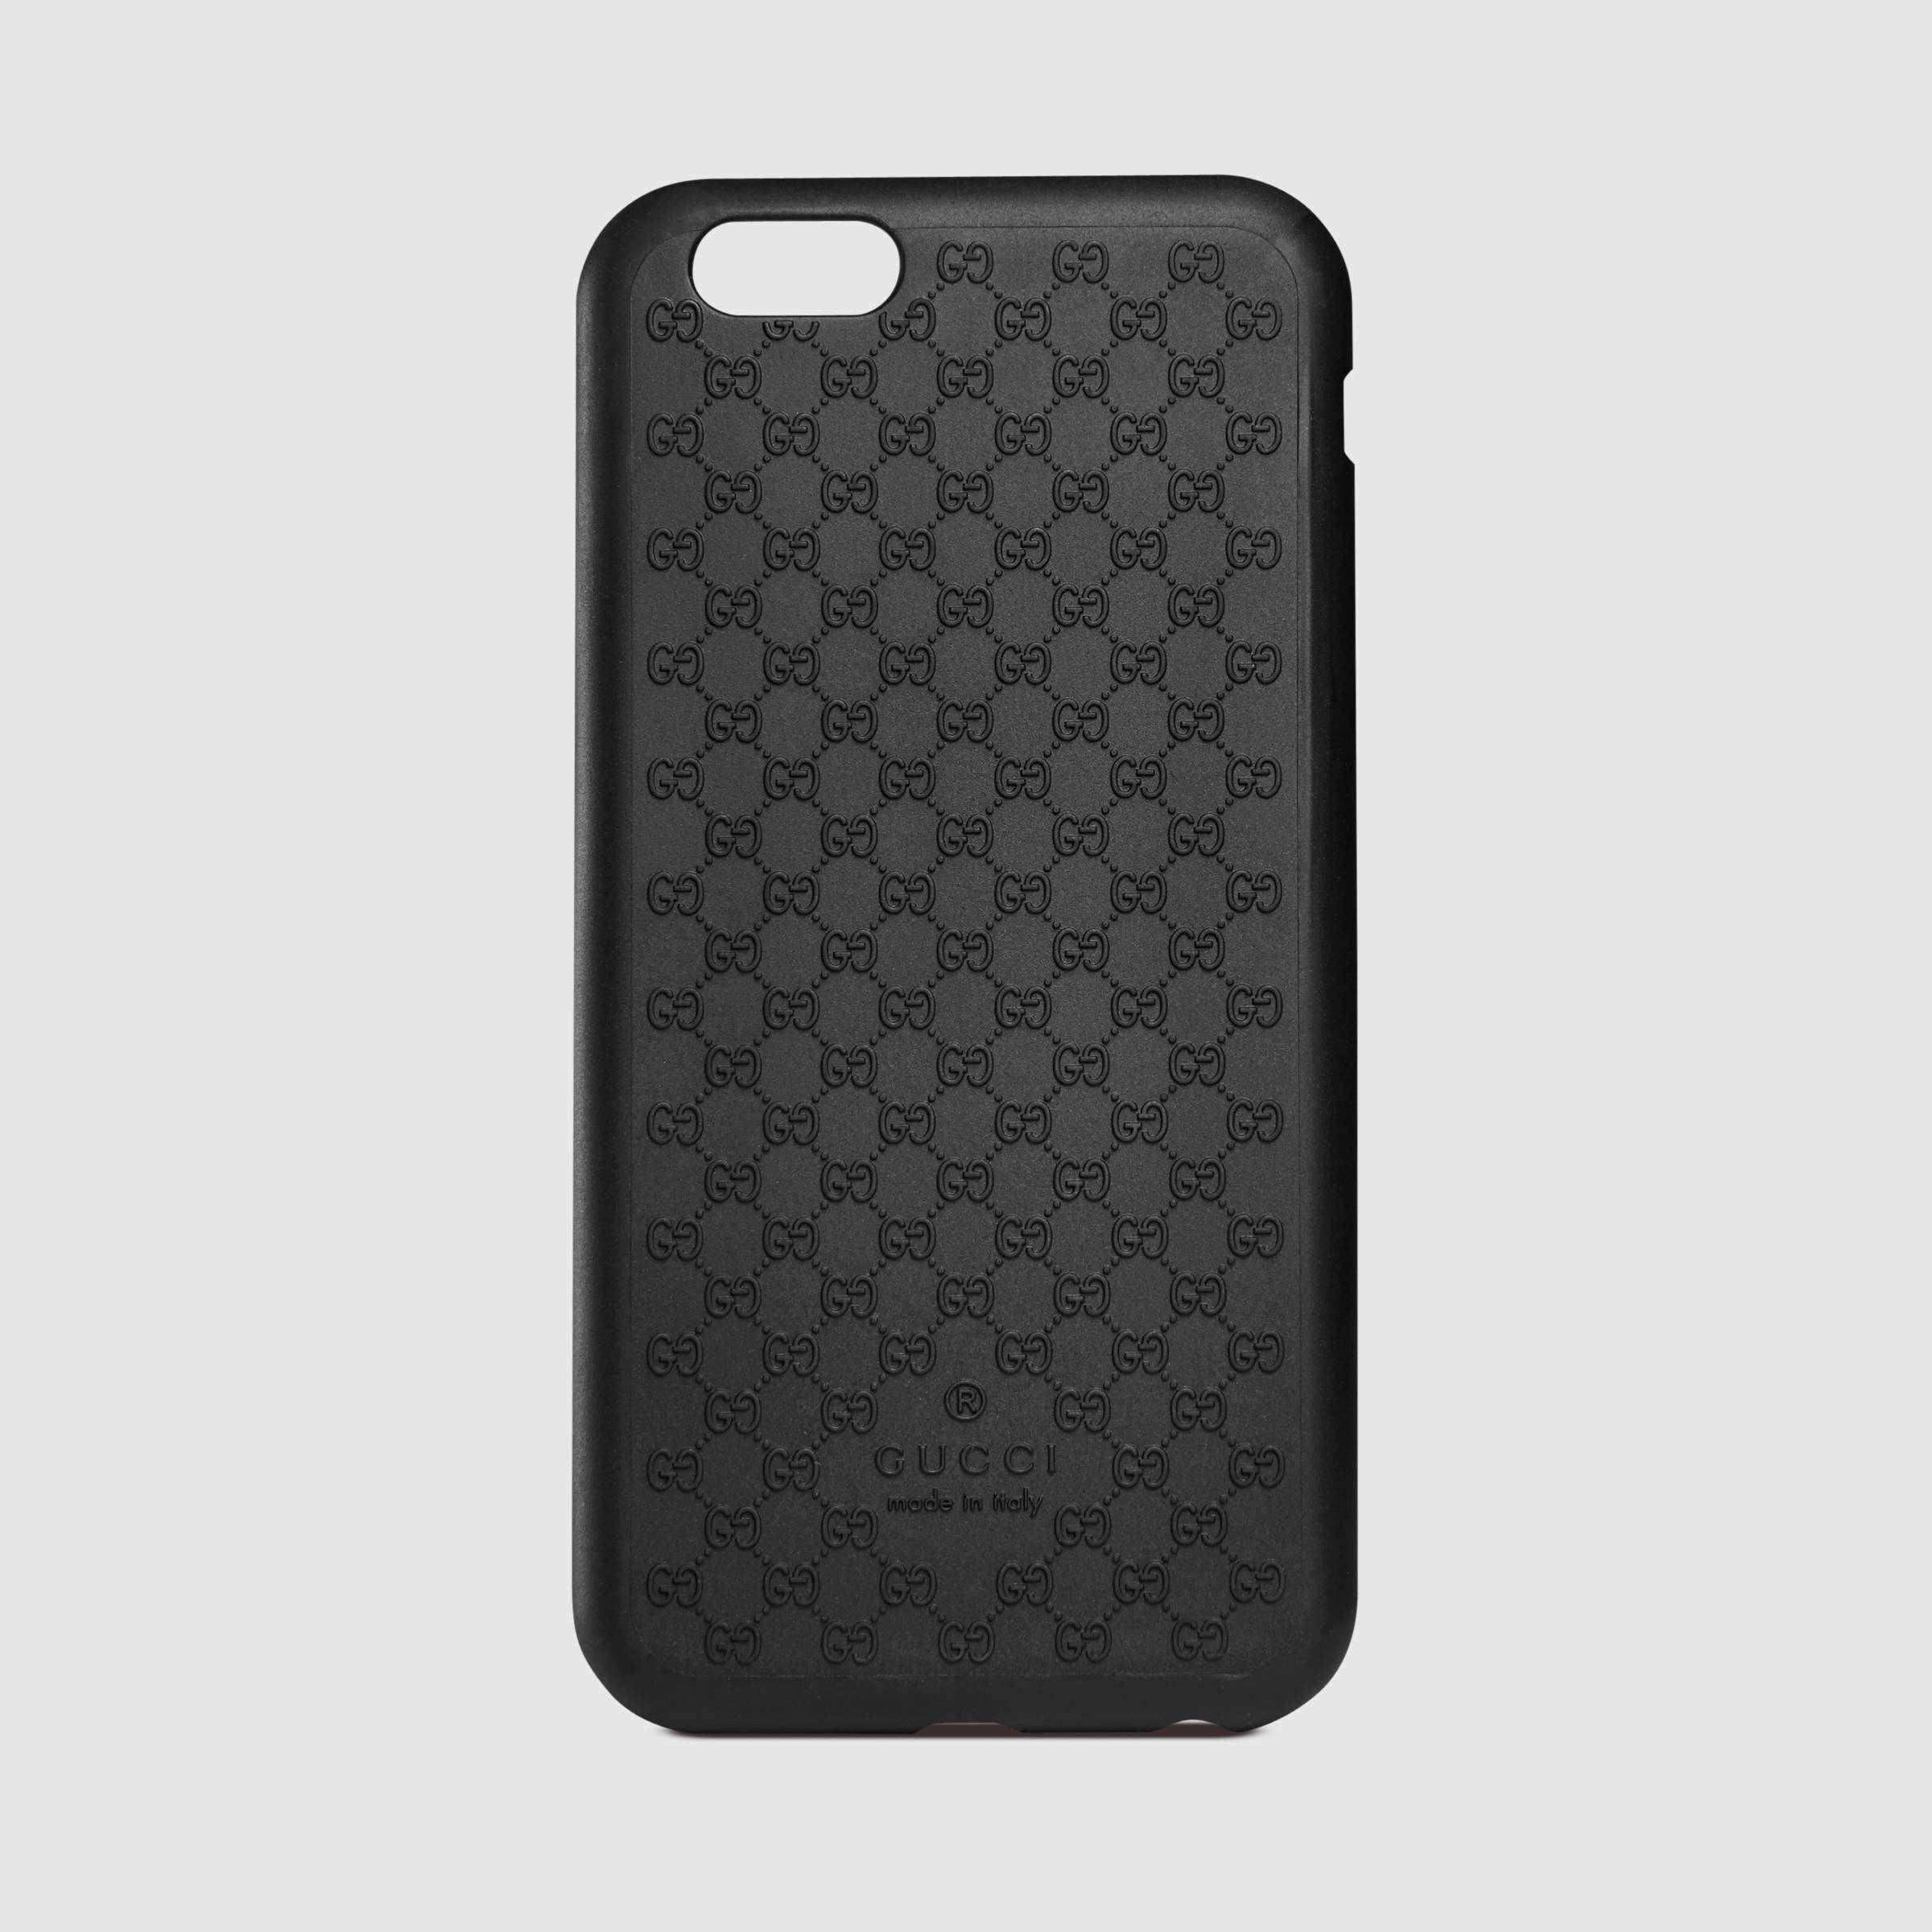 Gucci Iphone 6 Case SAVE - mpgc.net